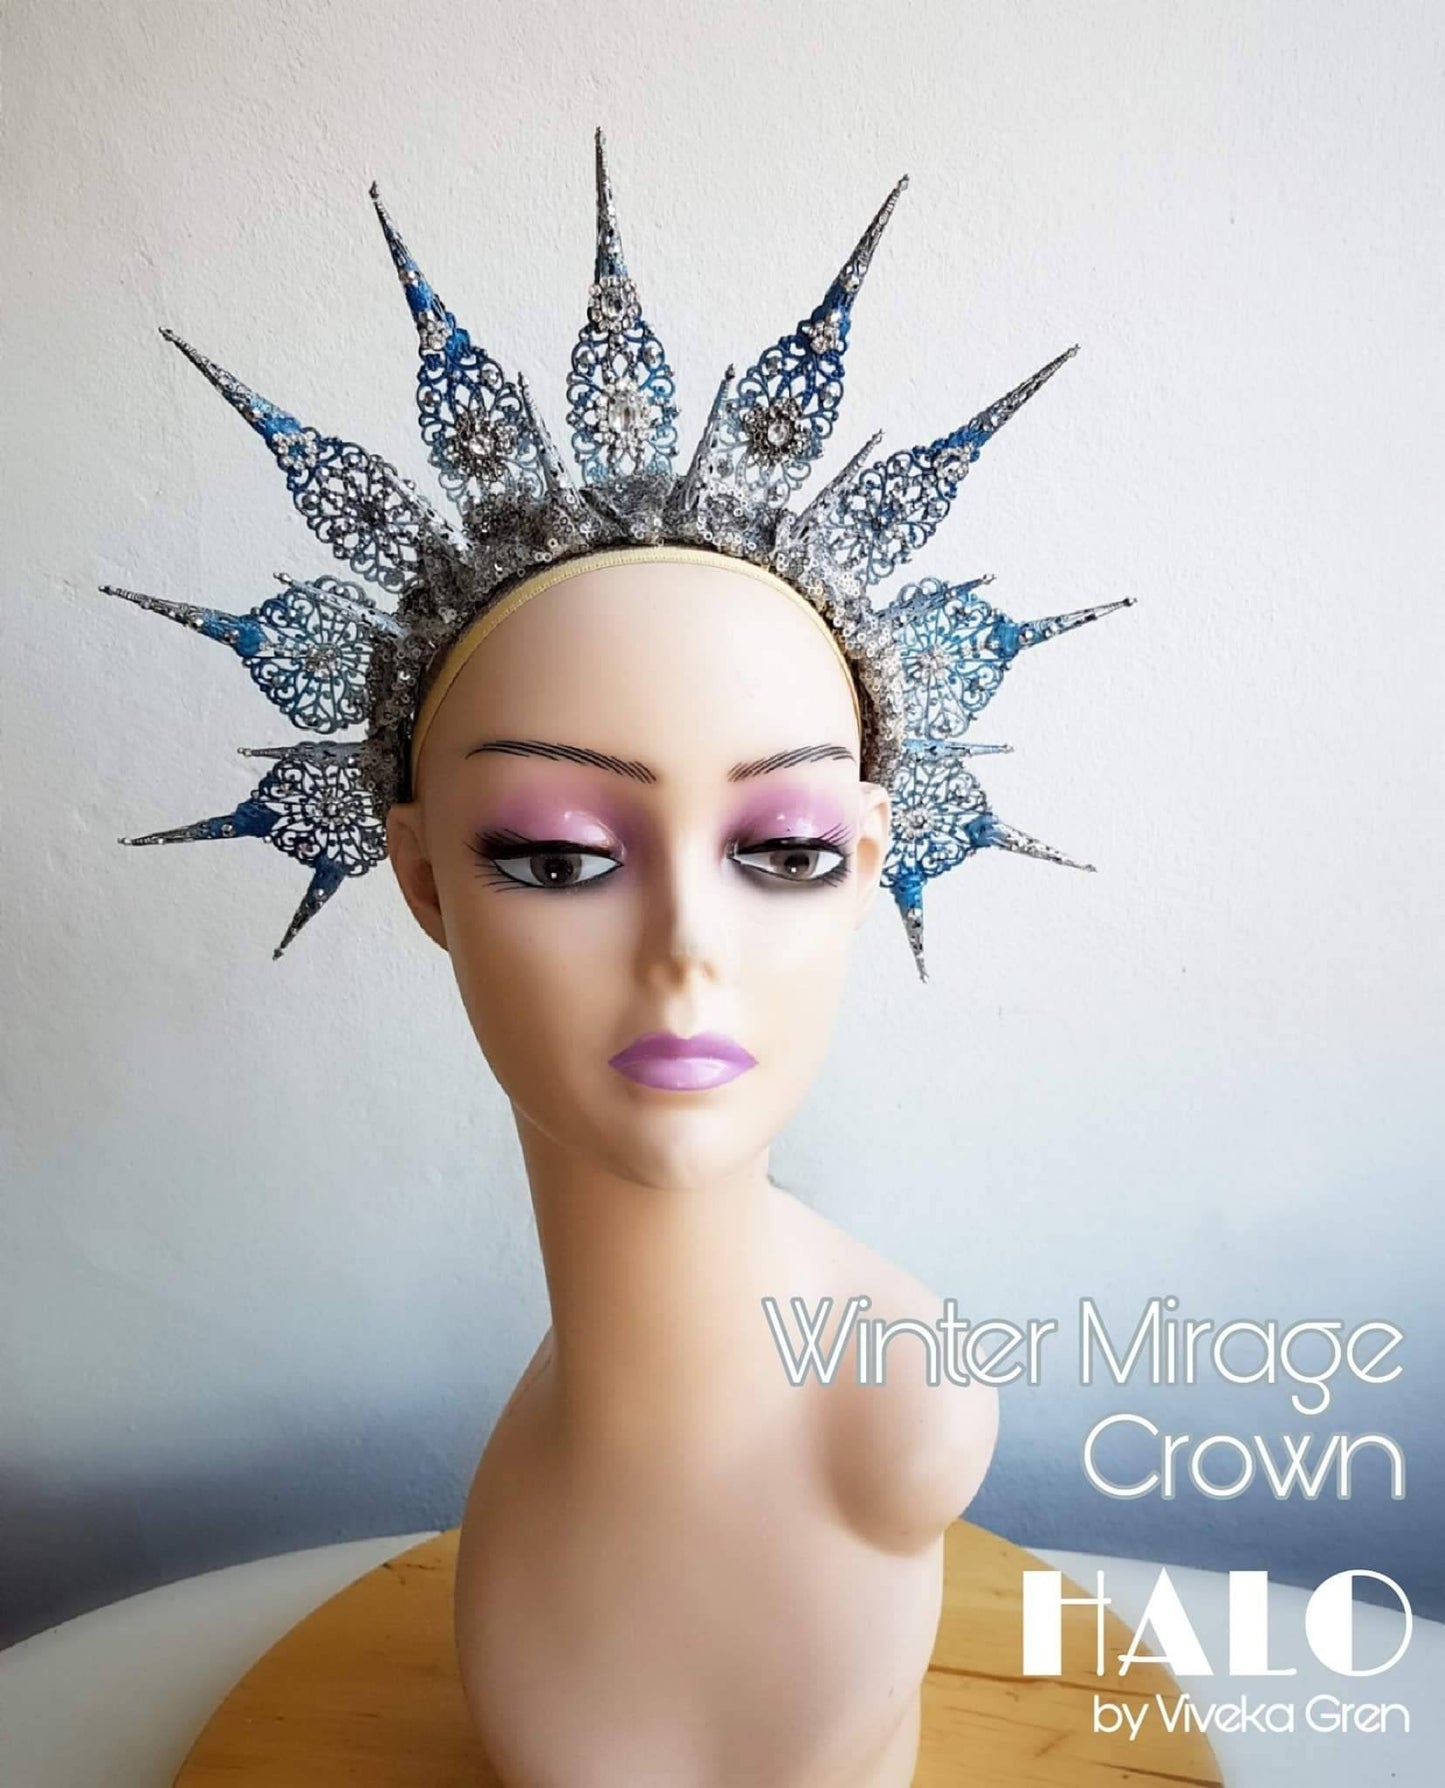 The Winter Mirage crown